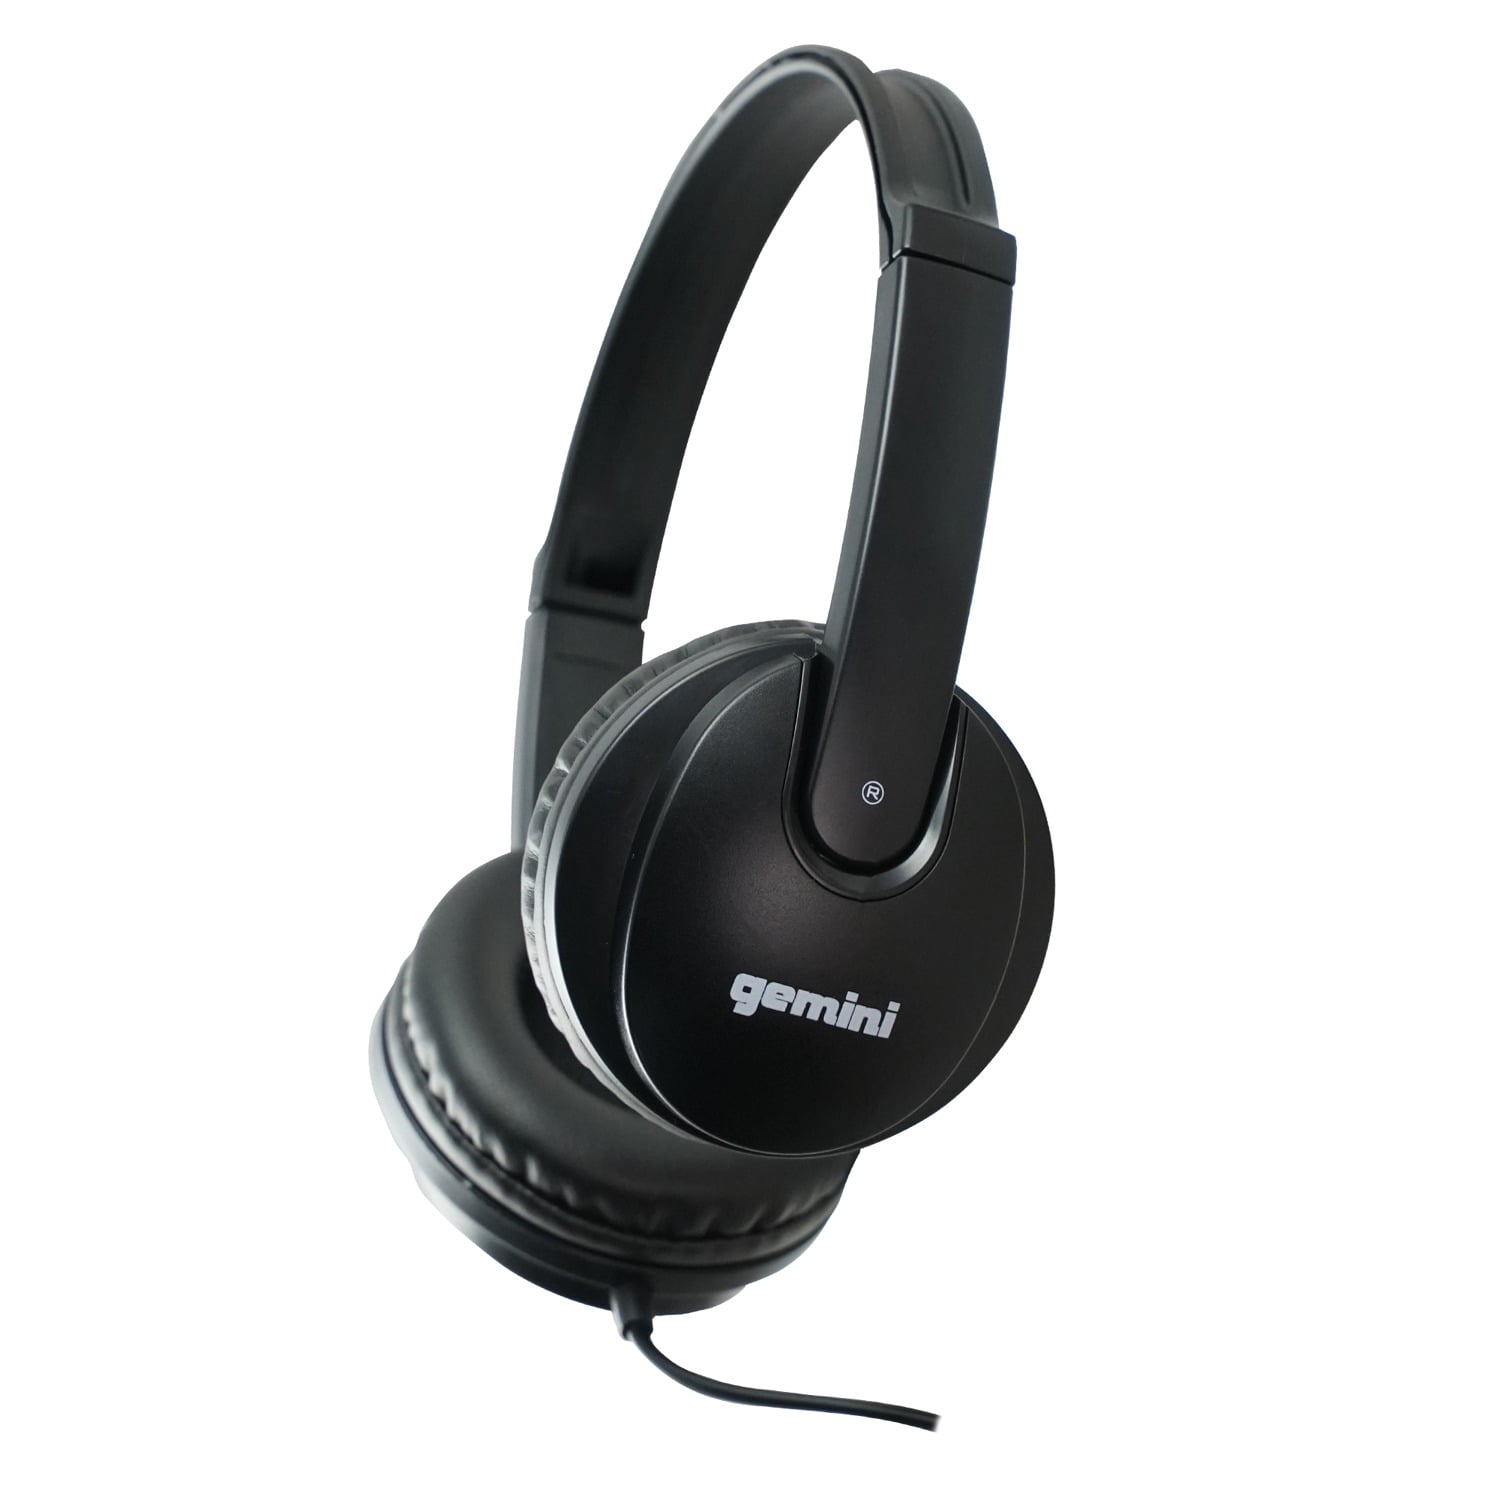 White WHT Gemini DJX-200 Professional Studio Over The Ear DJ Monitor Headphones 